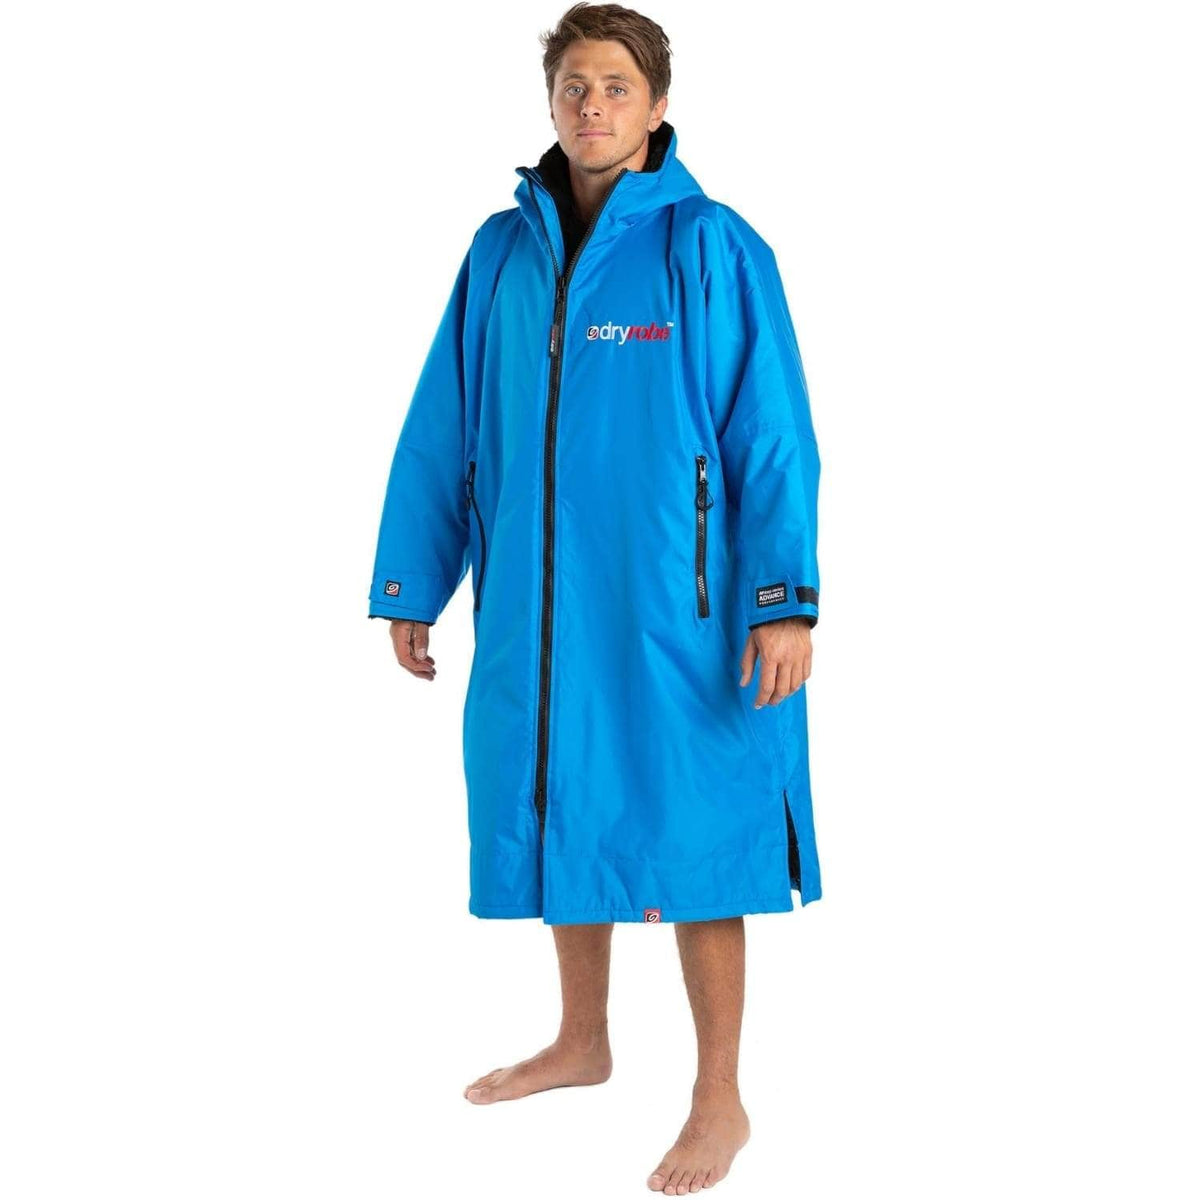 Dryrobe Advance Long Sleeve Drying &amp; Changing Robe - Cobalt Blue/Black - Changing Robe Poncho Towel by Dryrobe M